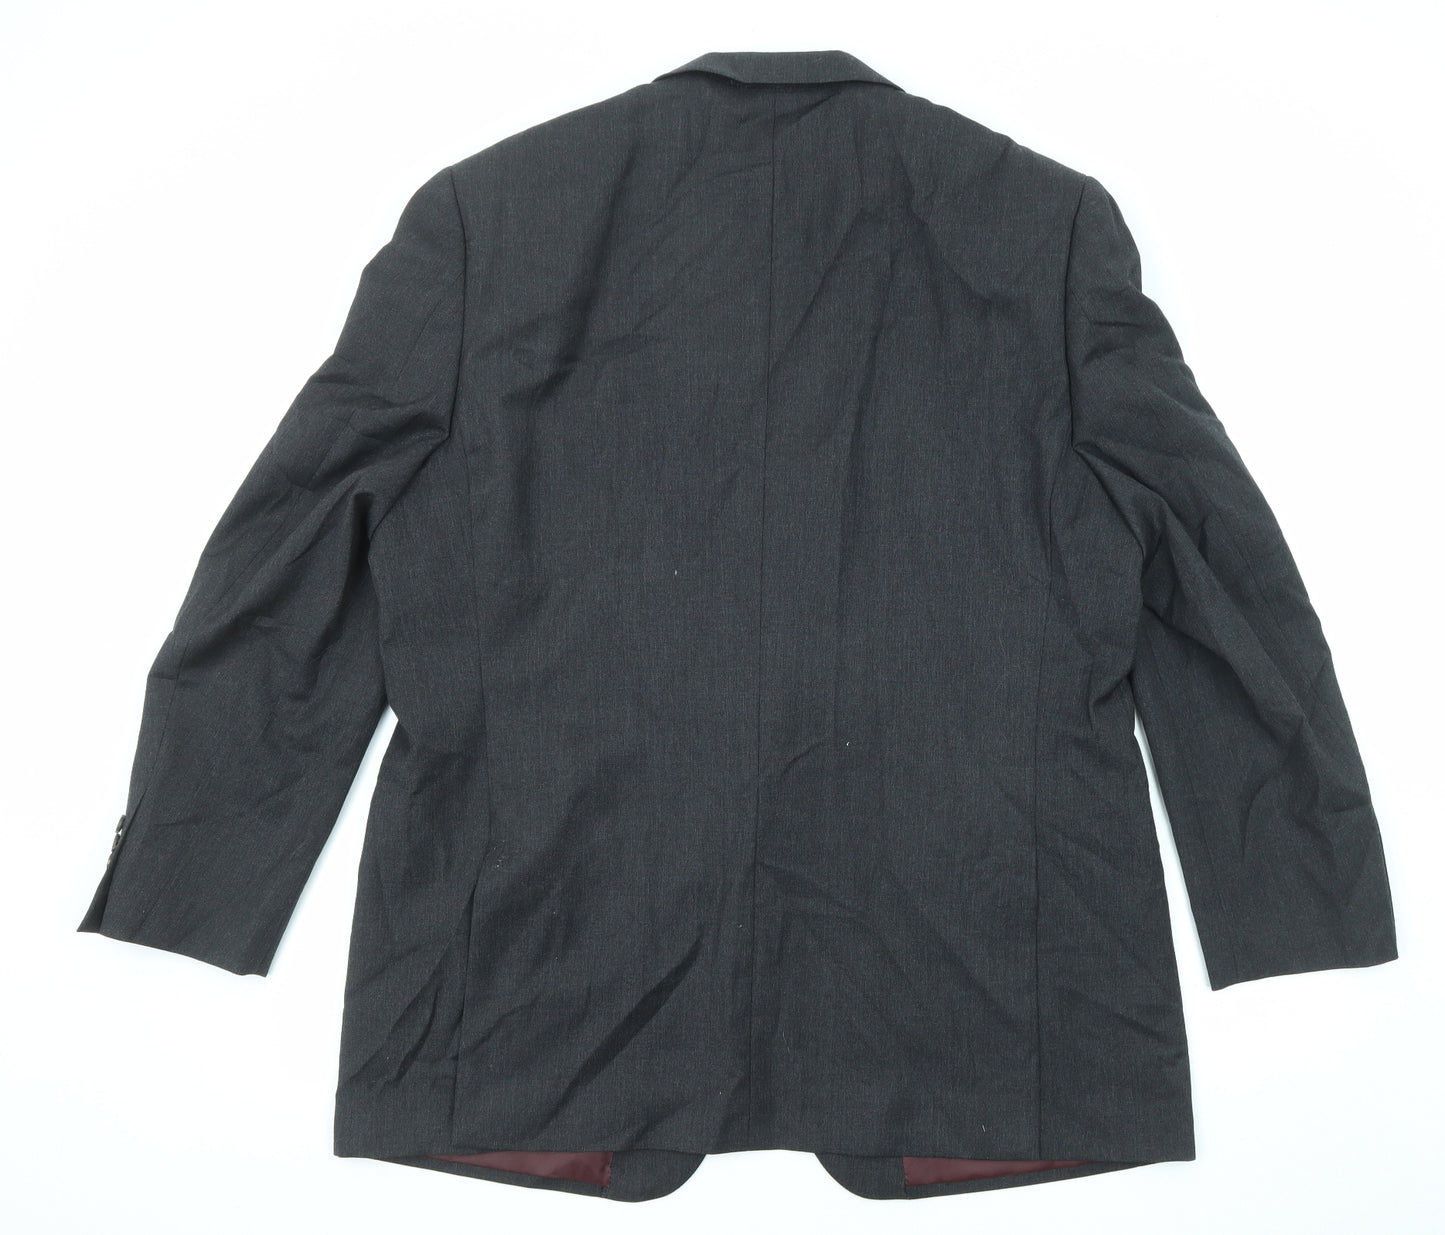 Greenwoods Mens Black Wool Jacket Suit Jacket Size 46 Regular